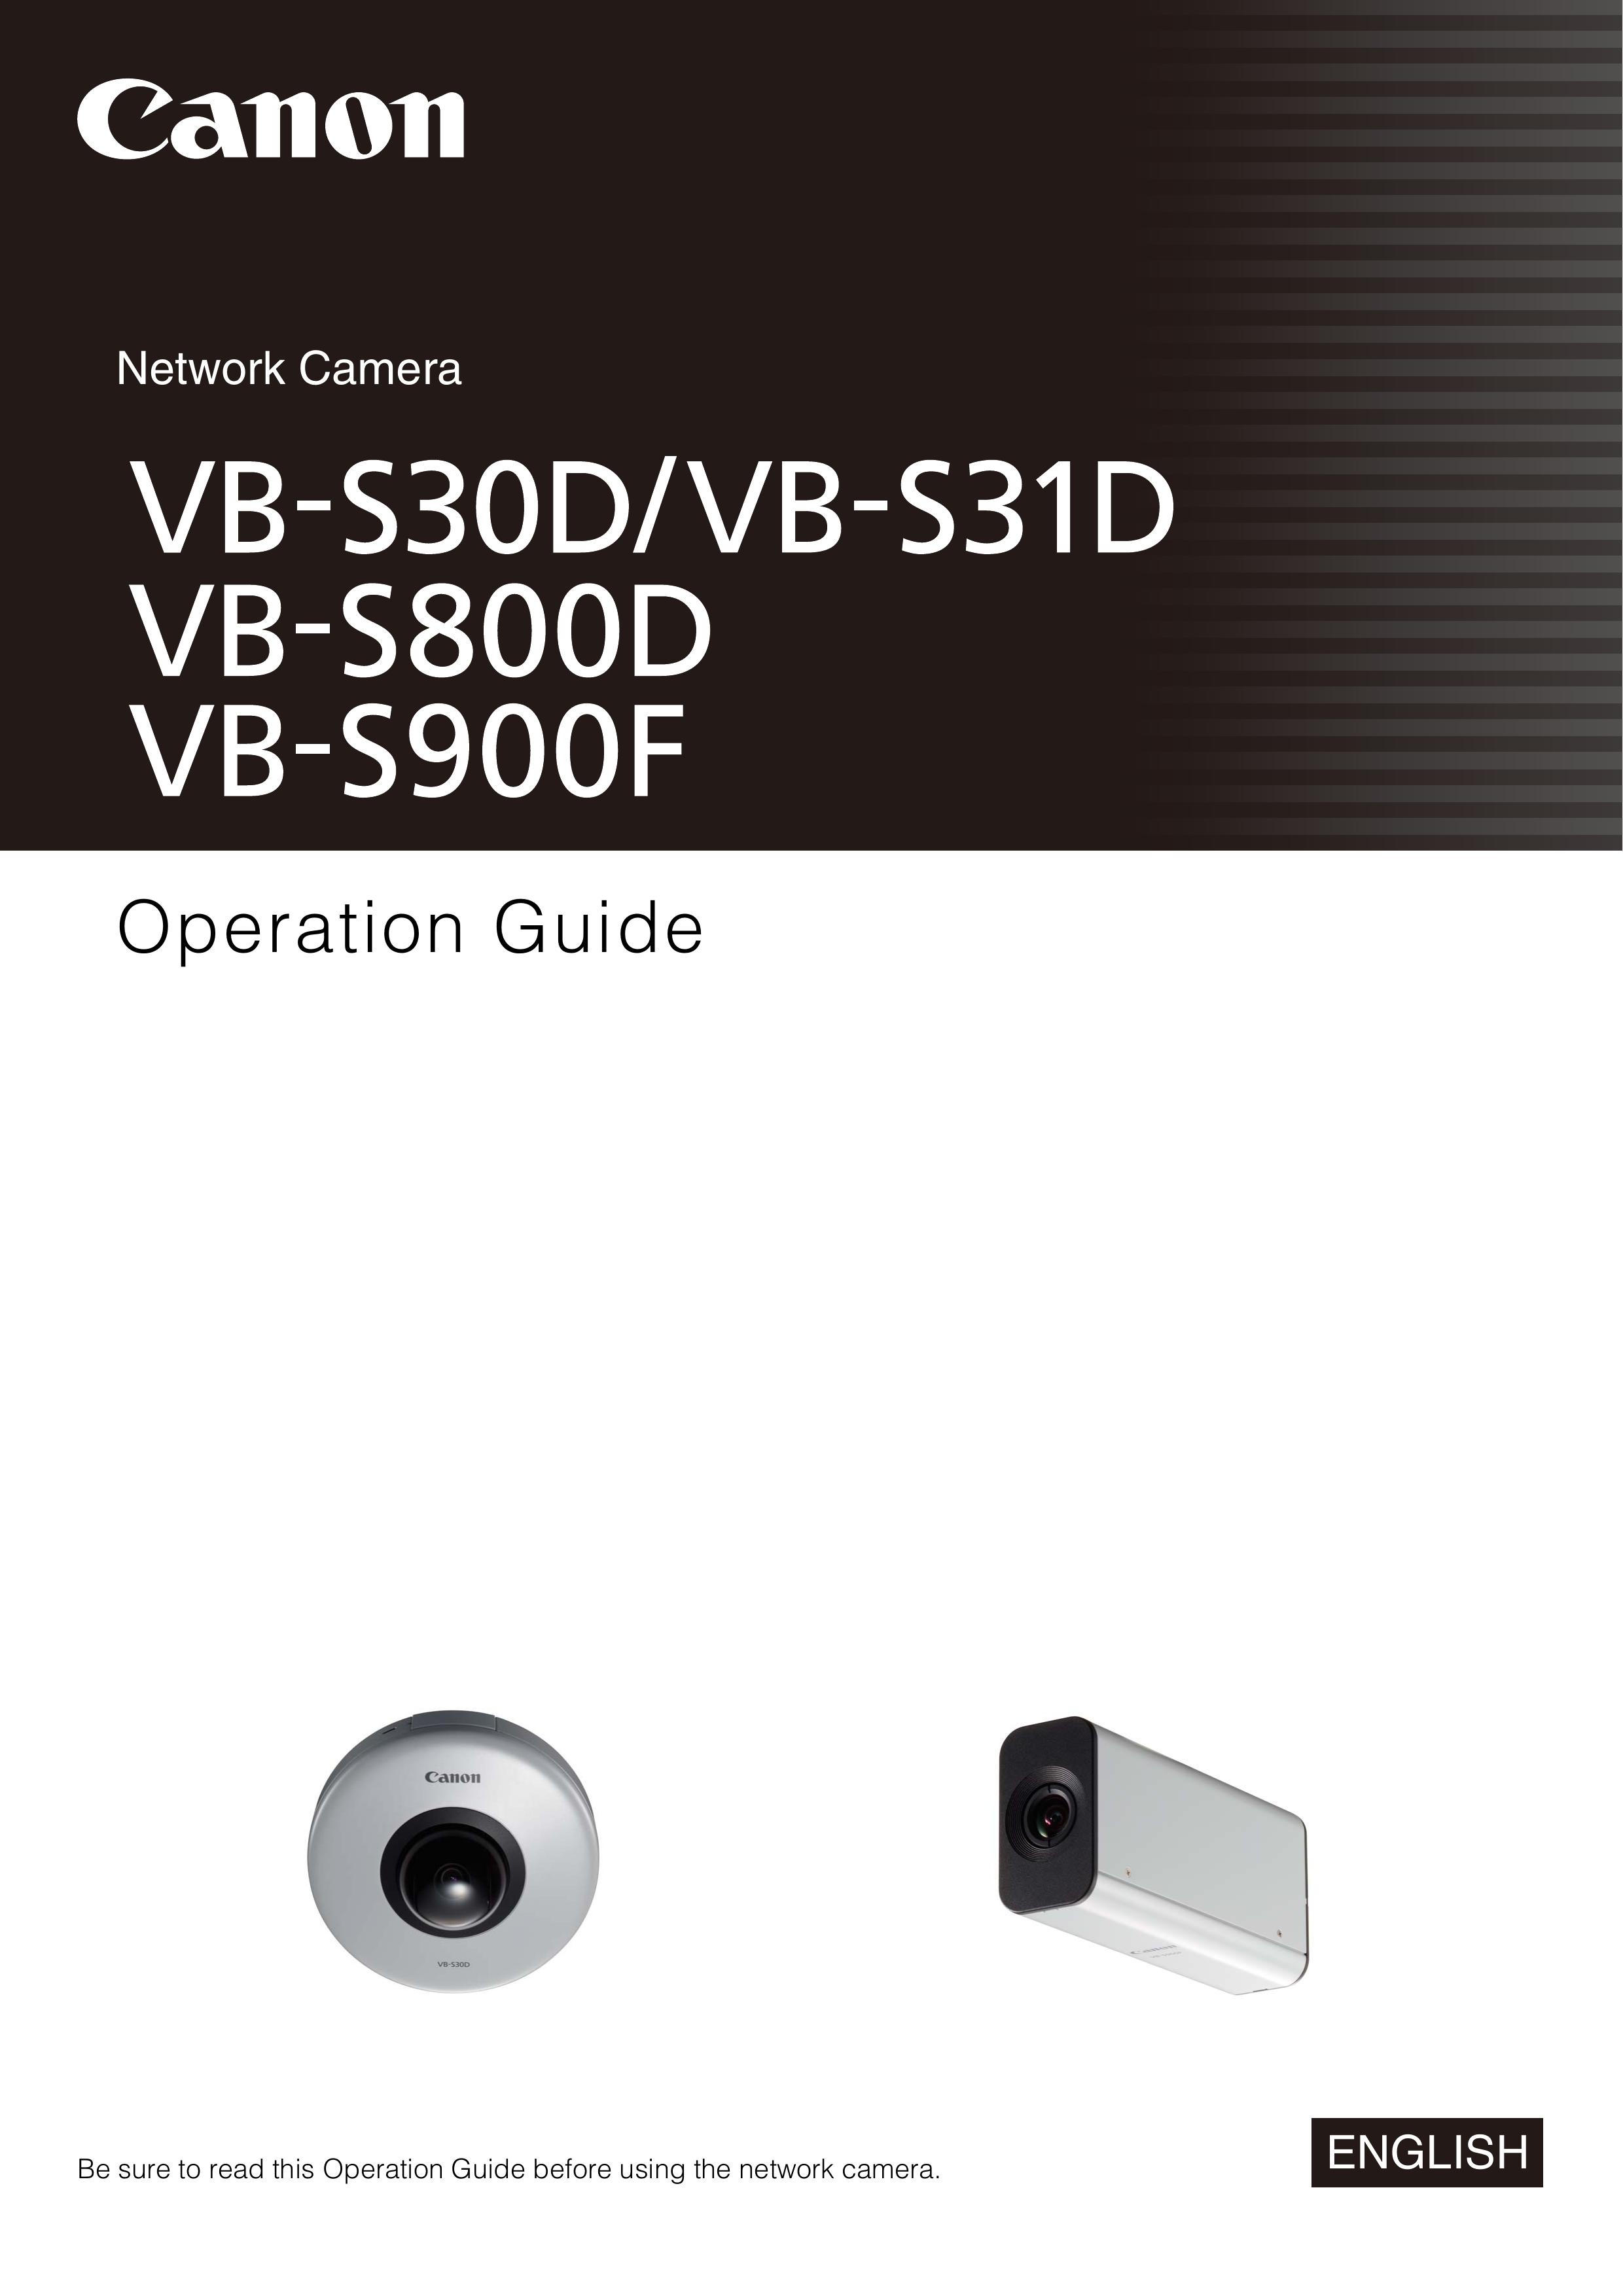 Canon vb-s30D Security Camera User Manual